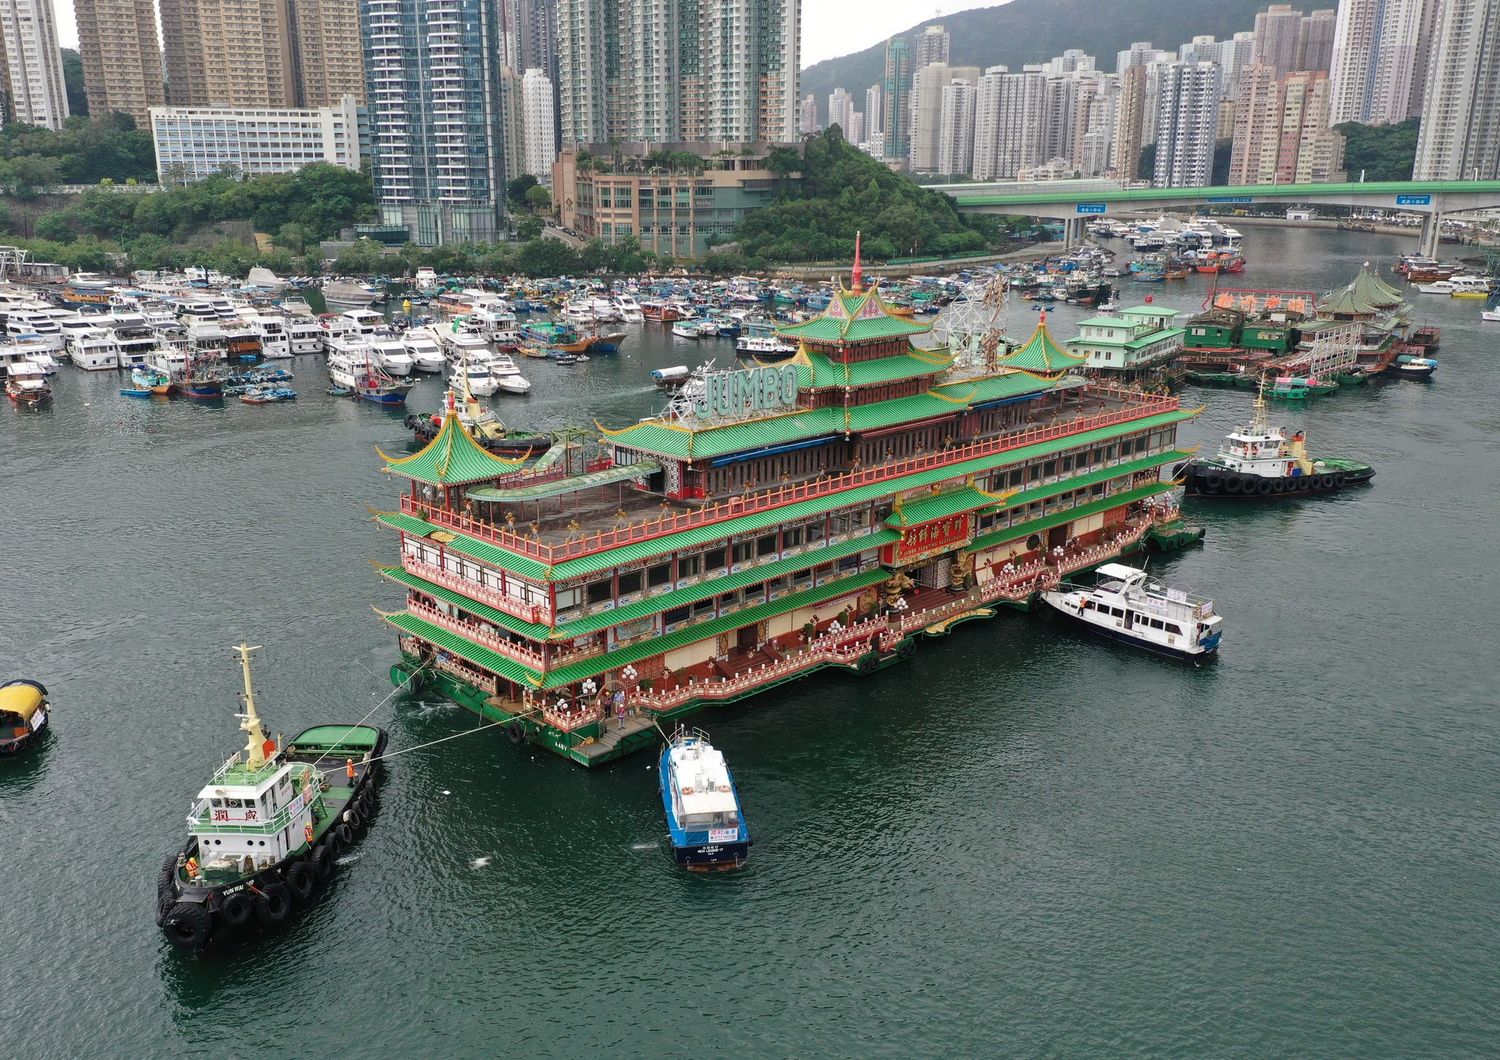 Jumbo, il leggendario ristorante galleggiante di Hong Kong